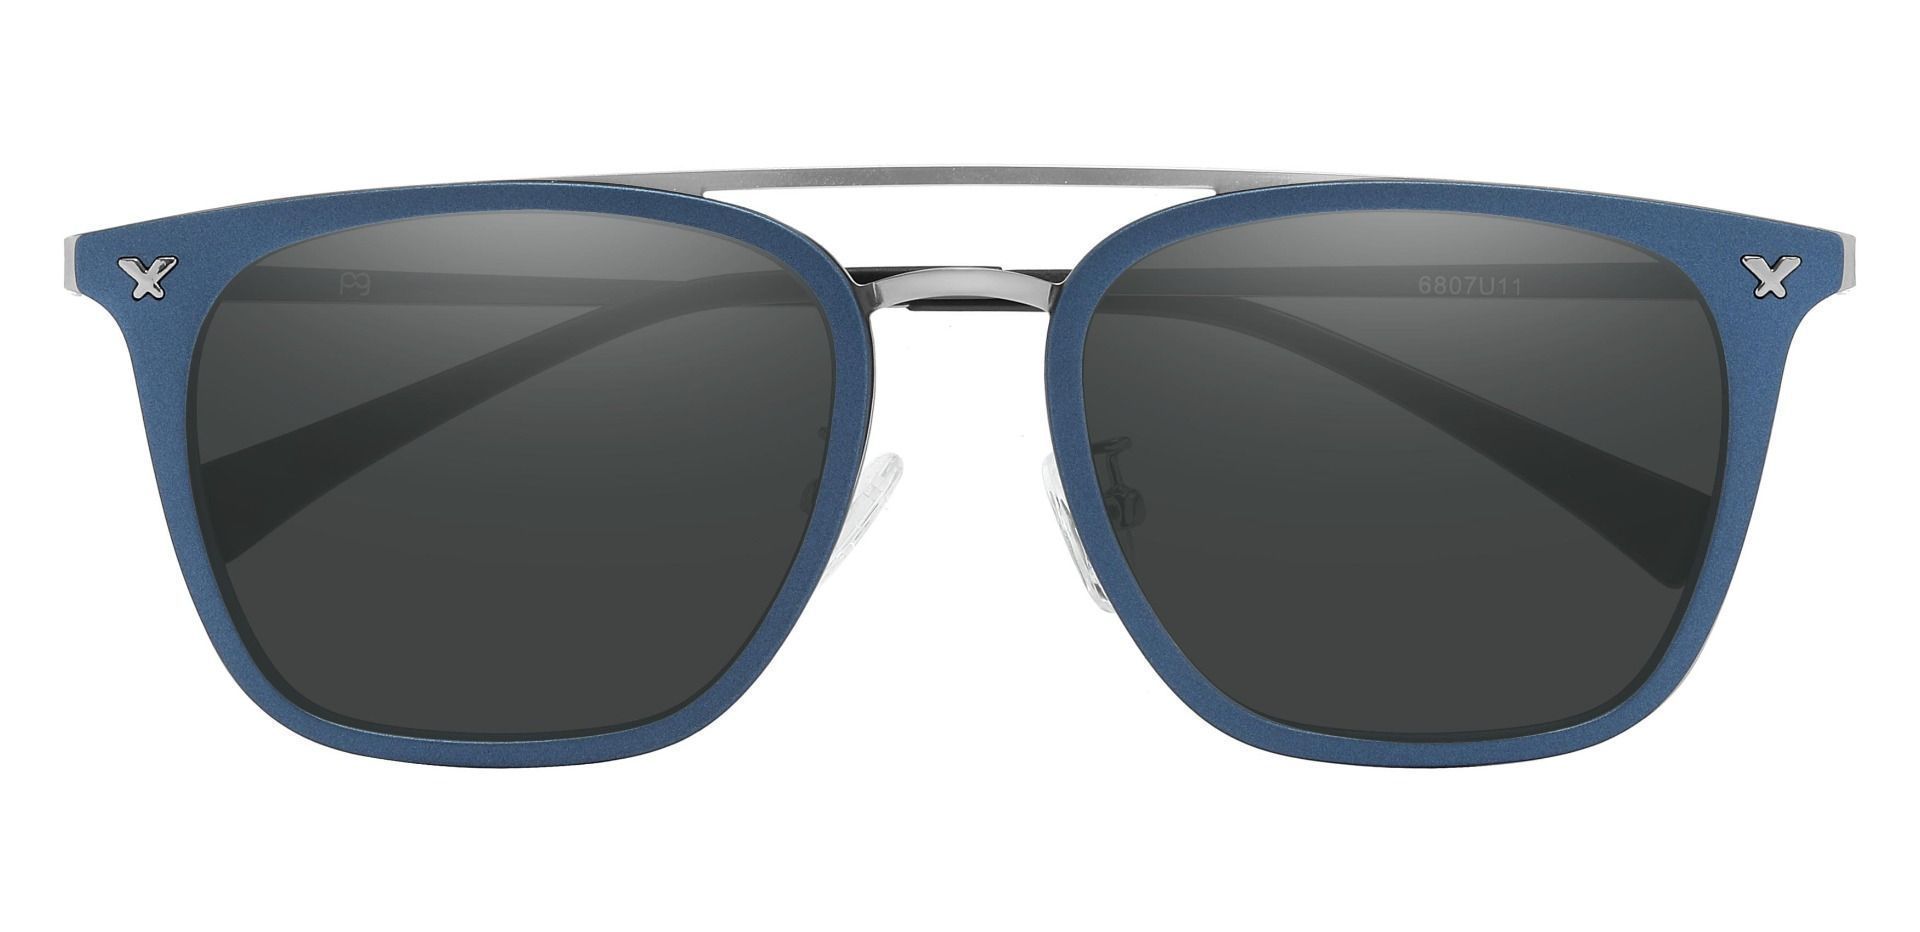 Francois Aviator Prescription Sunglasses - Blue Frame With Gray Lenses